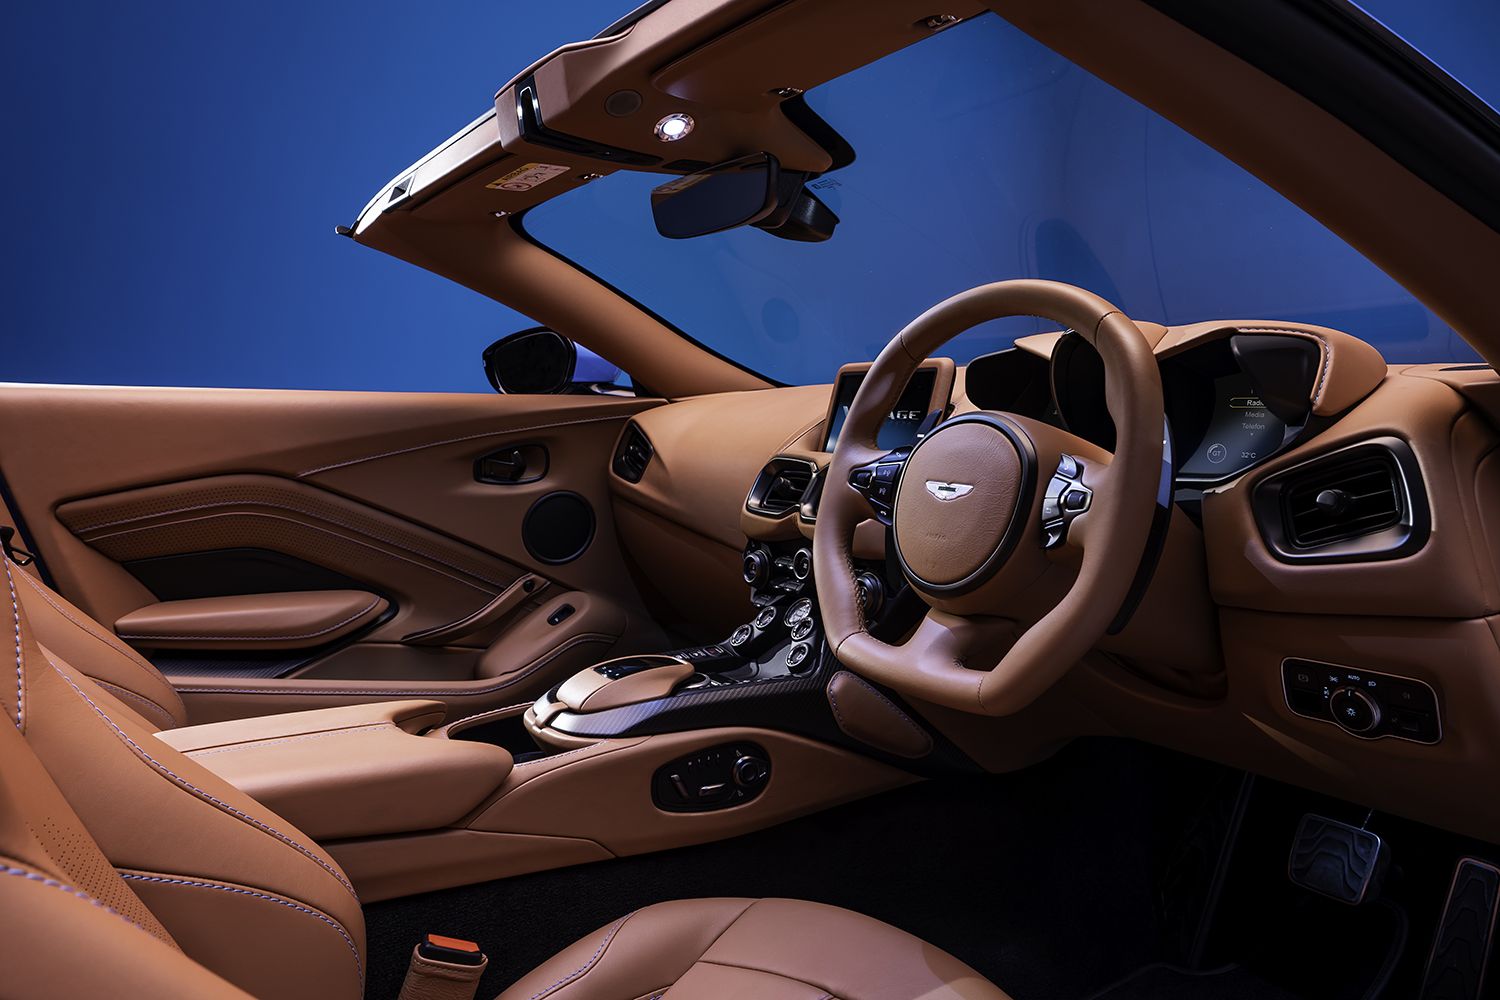 An Image Of The Interiors Of An Aston Martin Vantage